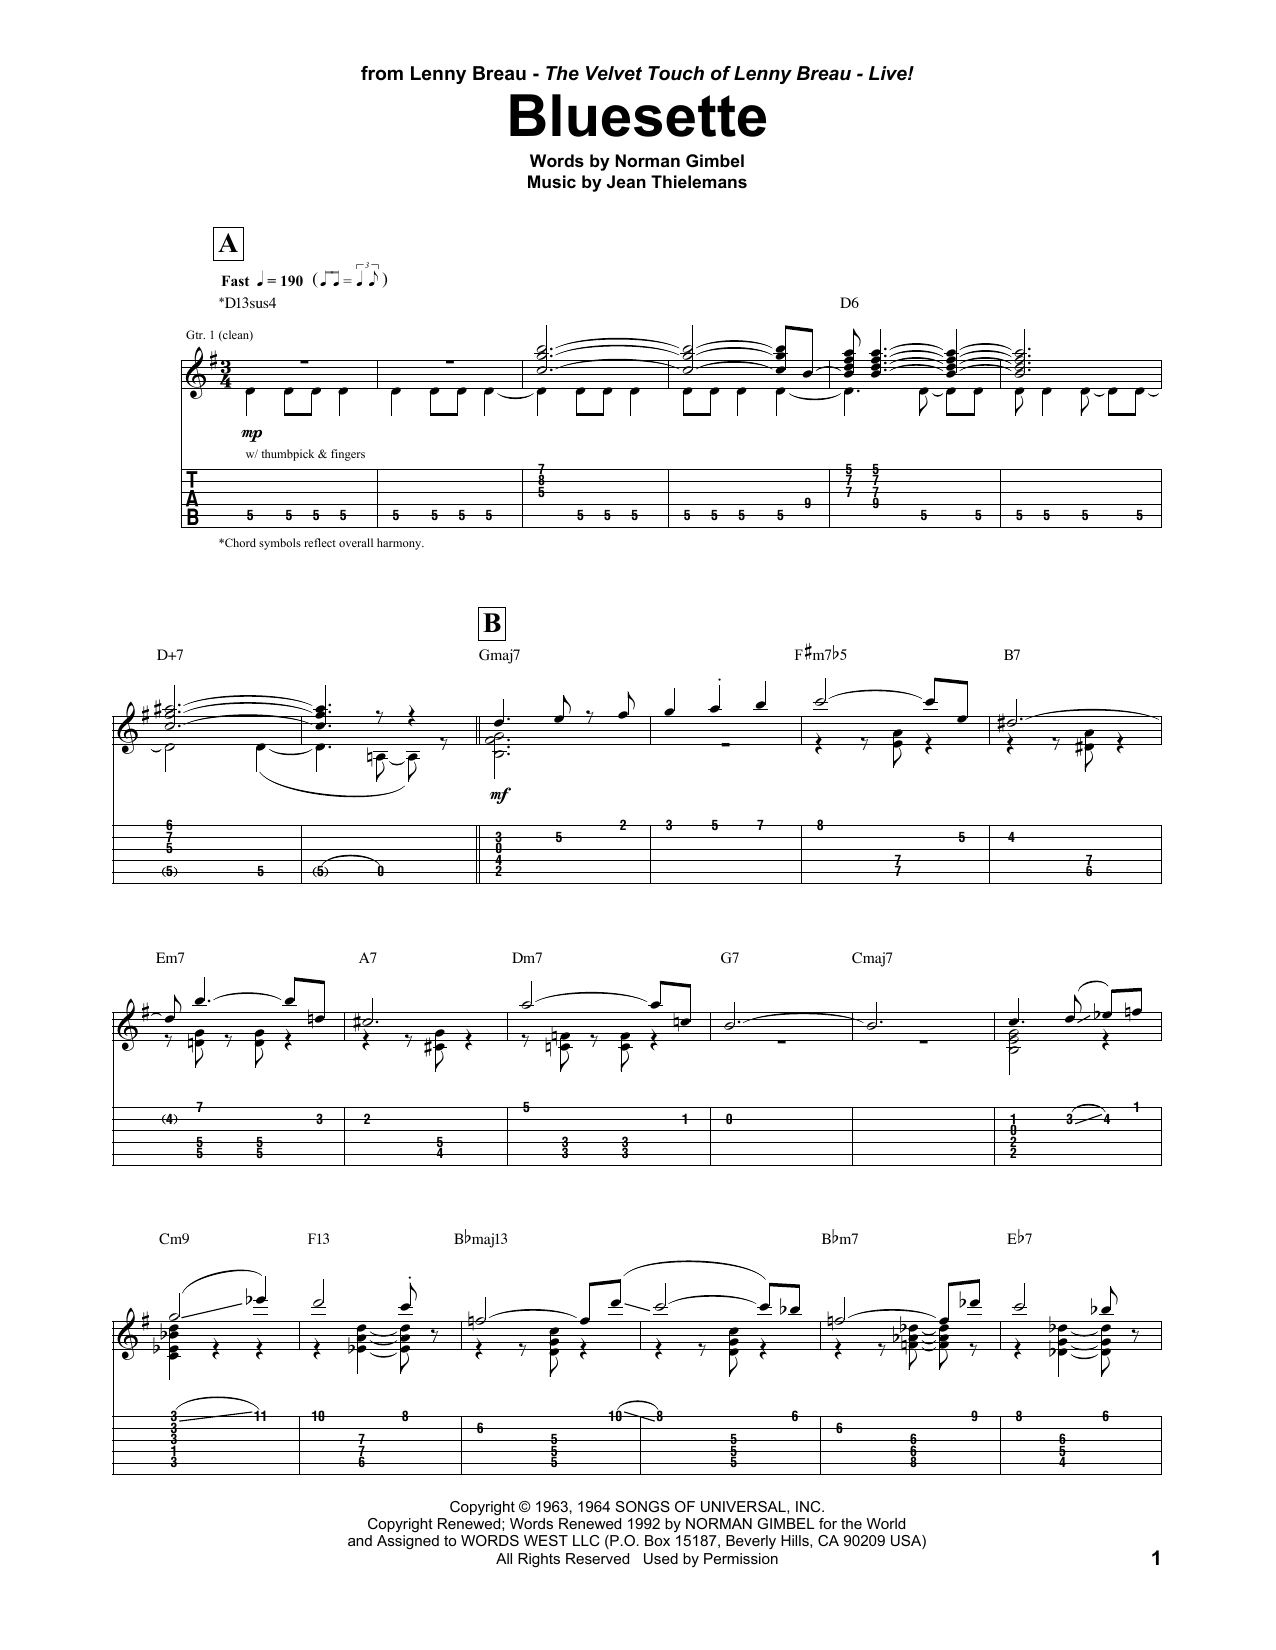 Lenny Breau Bluesette Sheet Music Notes & Chords for Guitar Tab - Download or Print PDF